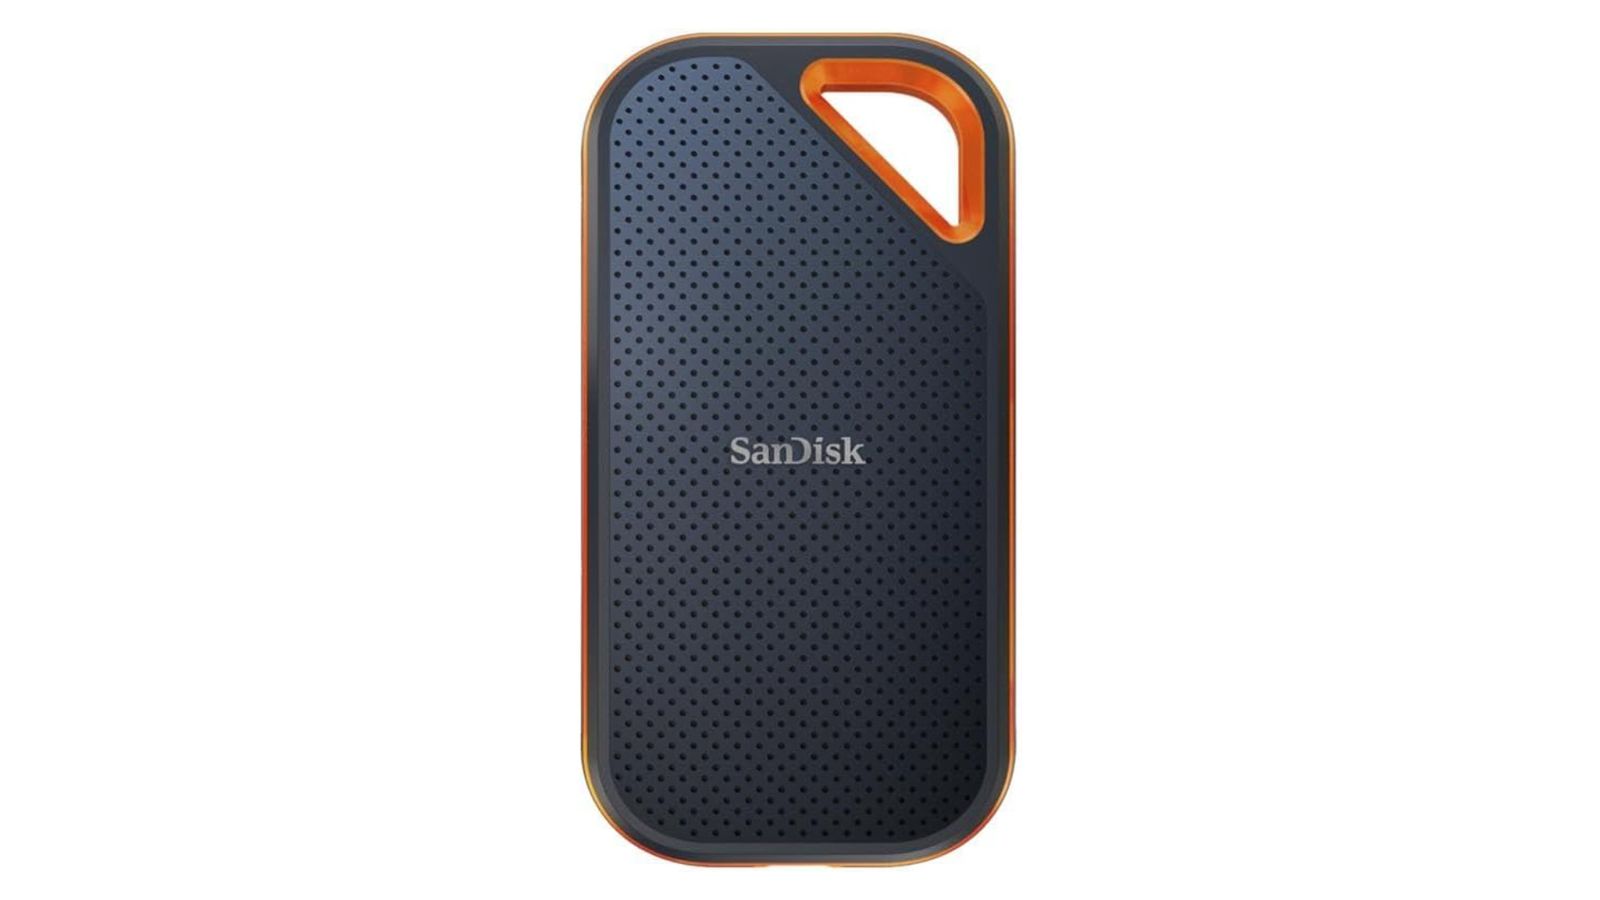 SanDisk Extreme Pro product image of a dark grey and orange, rectangular hard drive.